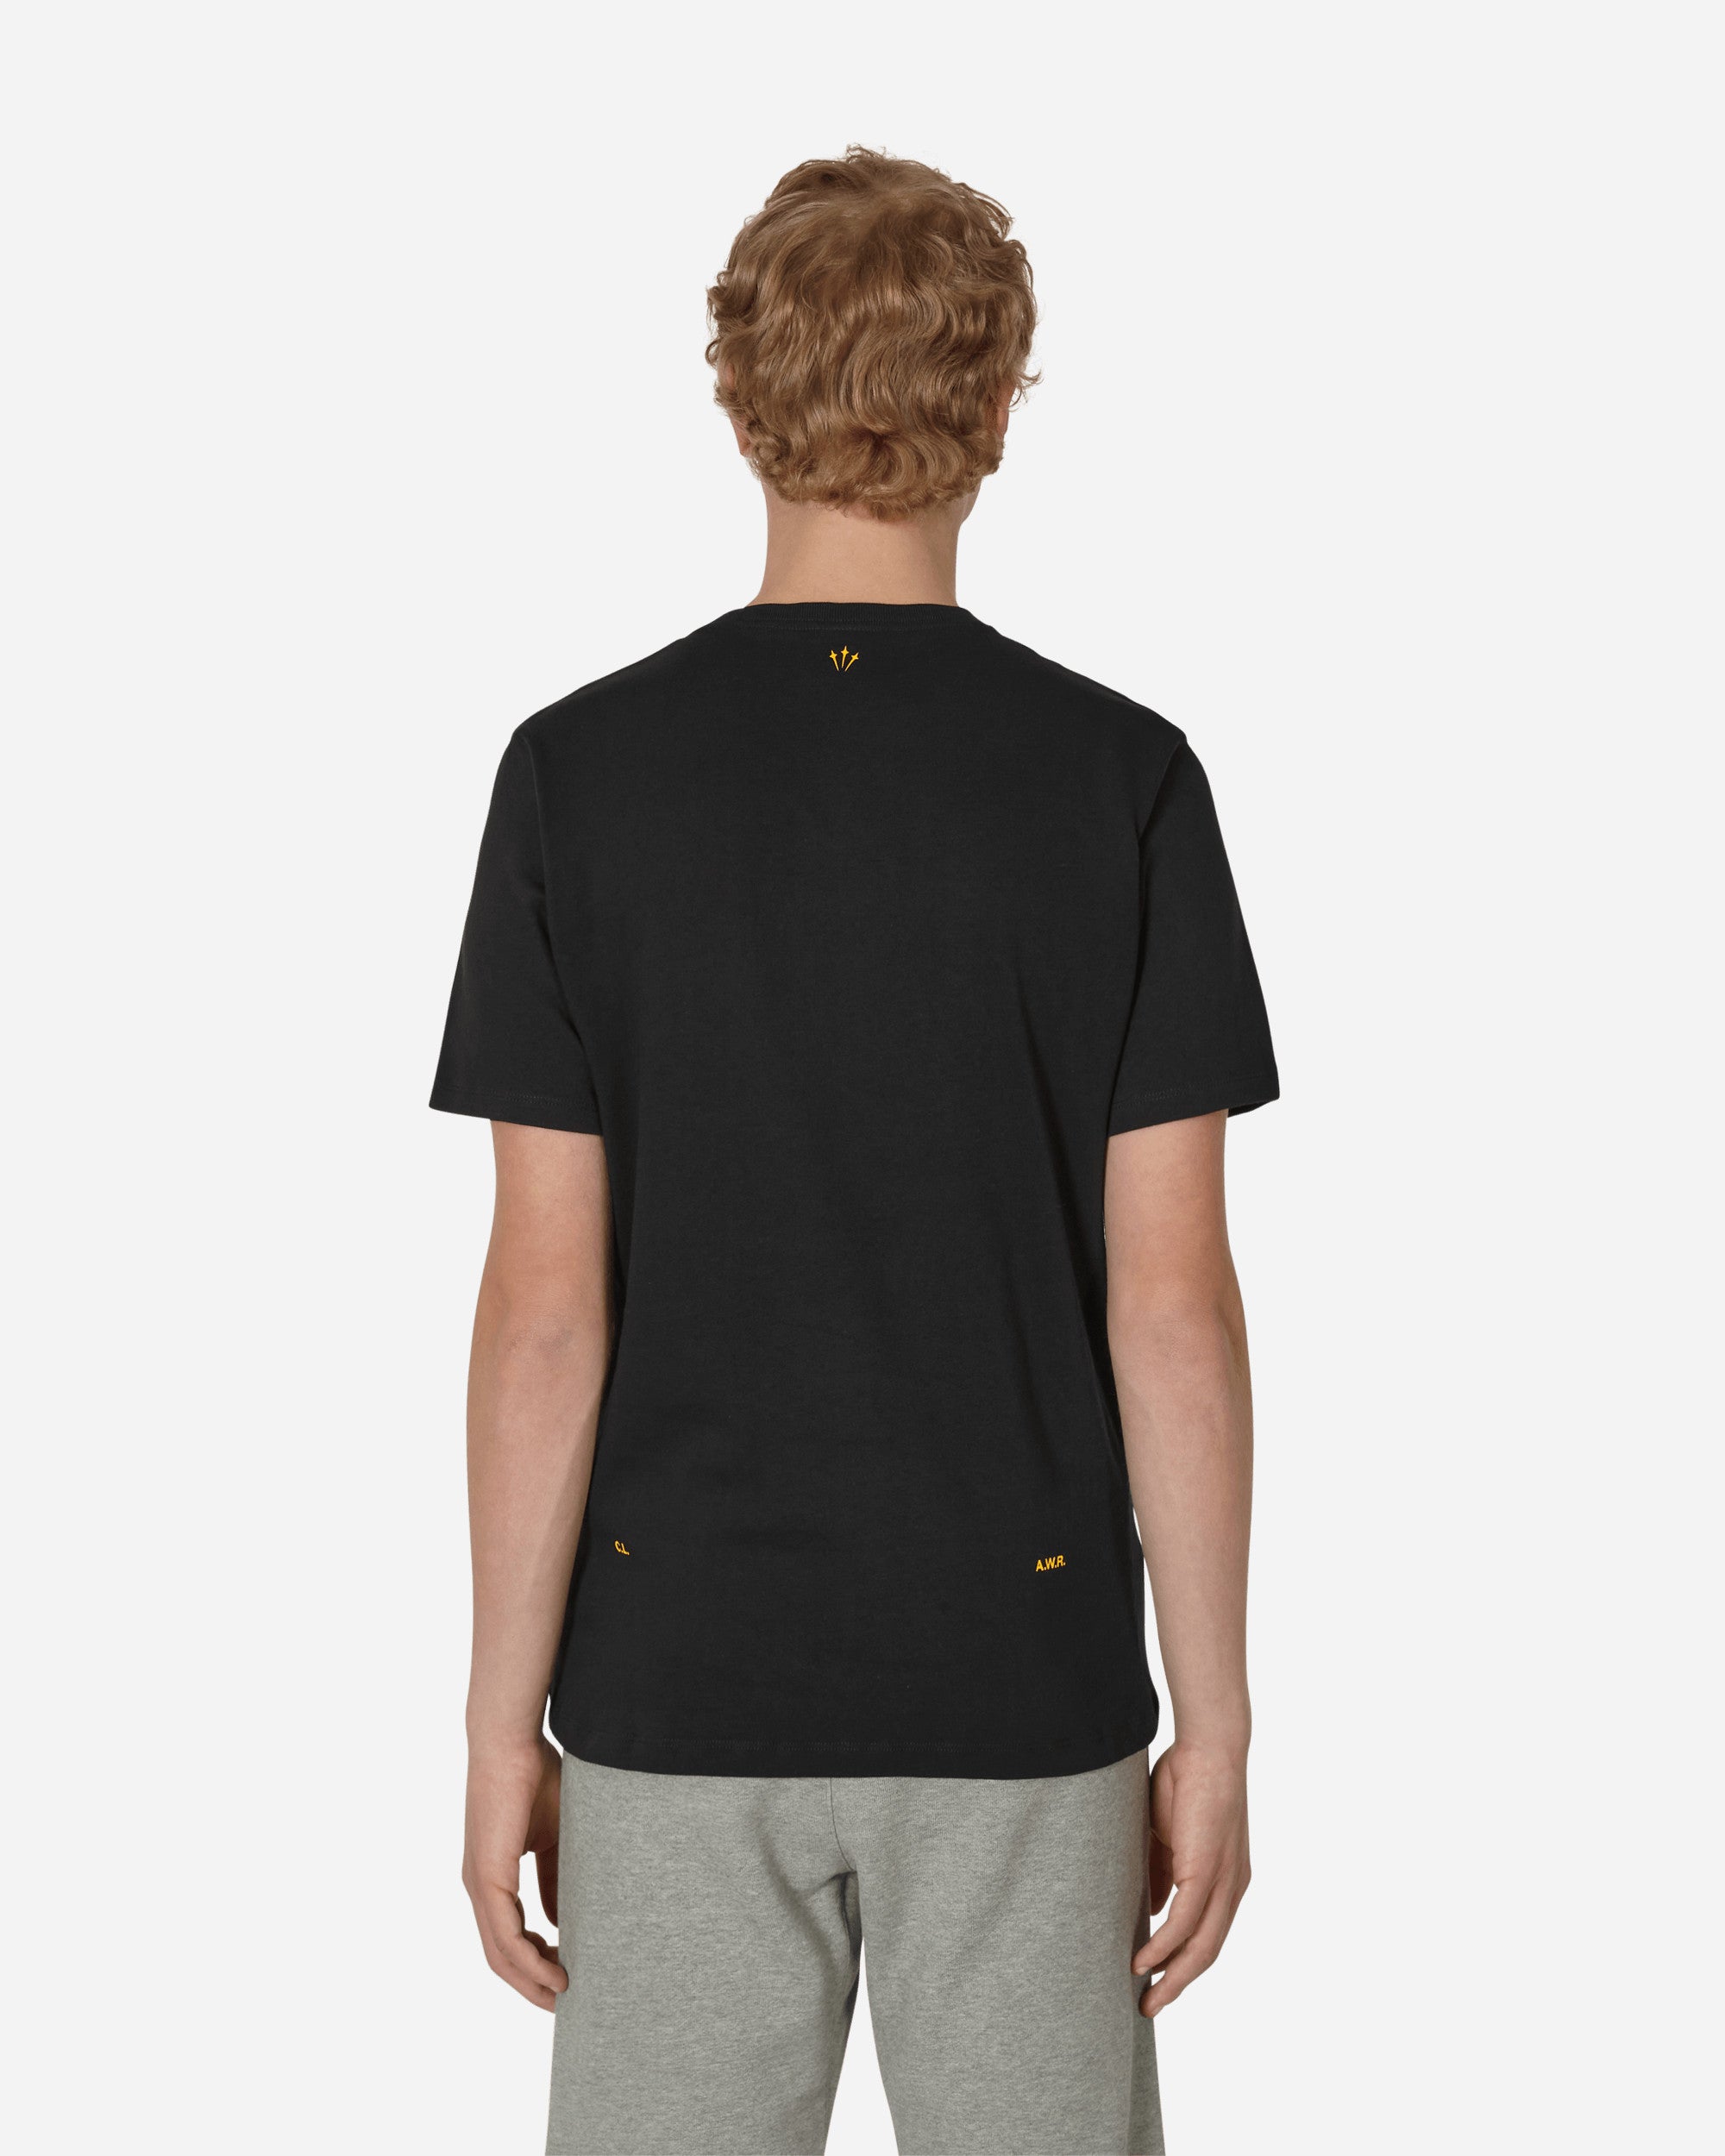 Nike NOCTA T-Shirt Black - Slam Jam® Official Store